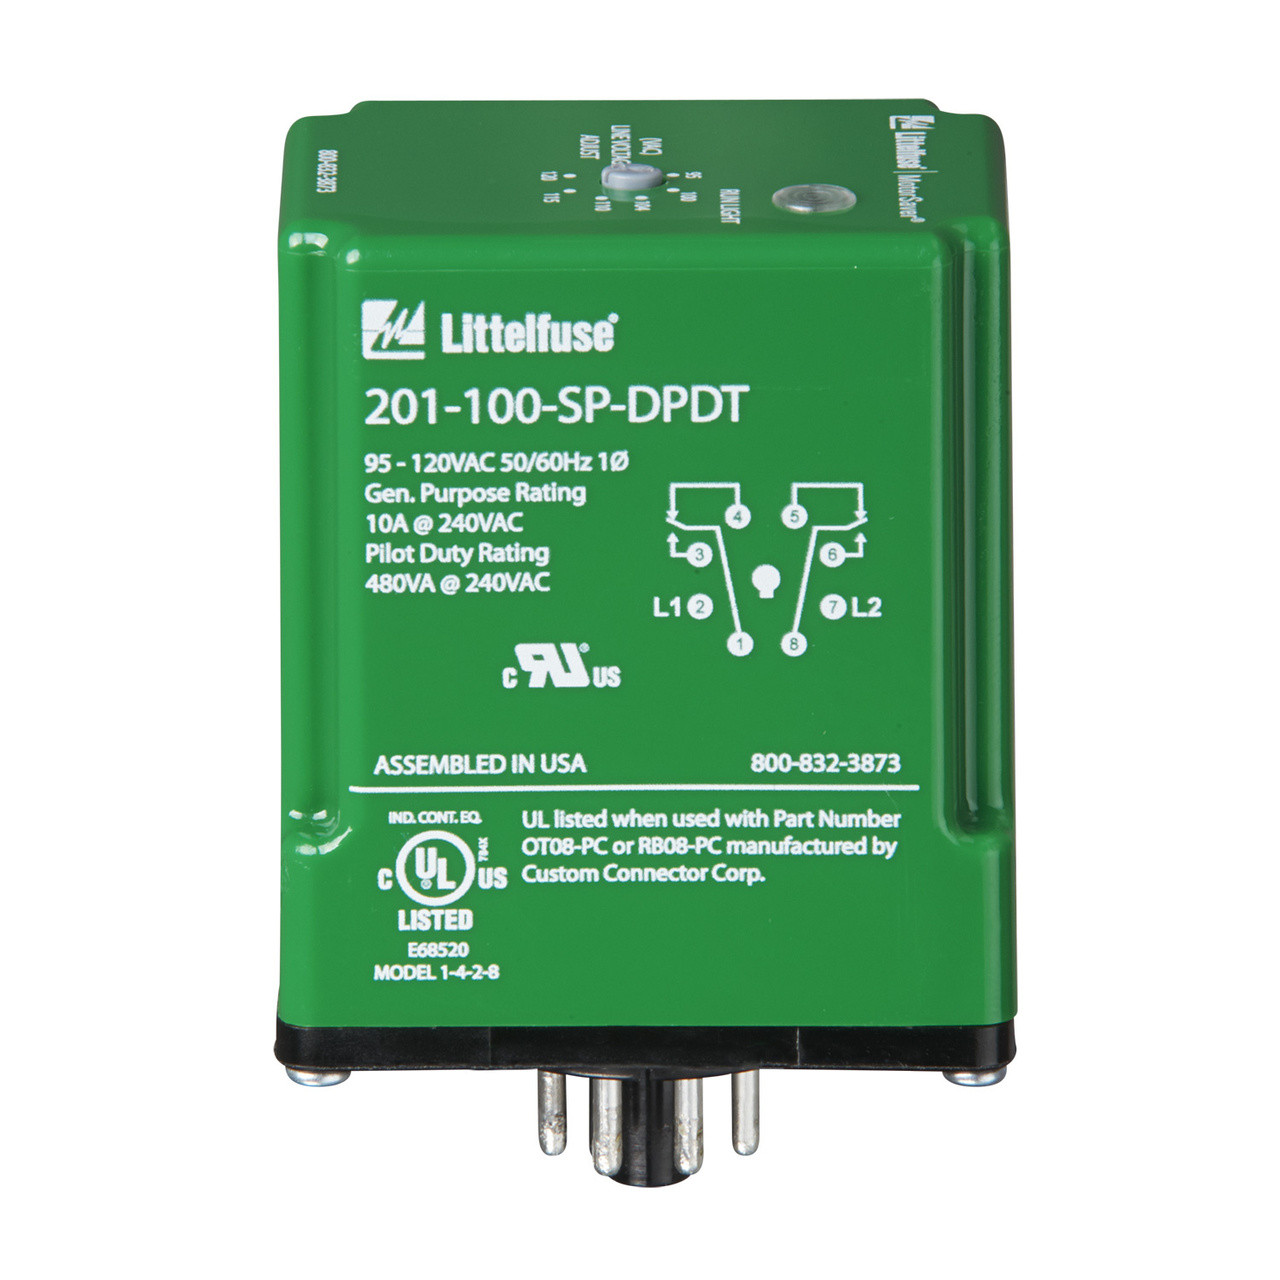 Littelfuse-Symcom 201-200-SP-T-9 Voltage Monitor Relays